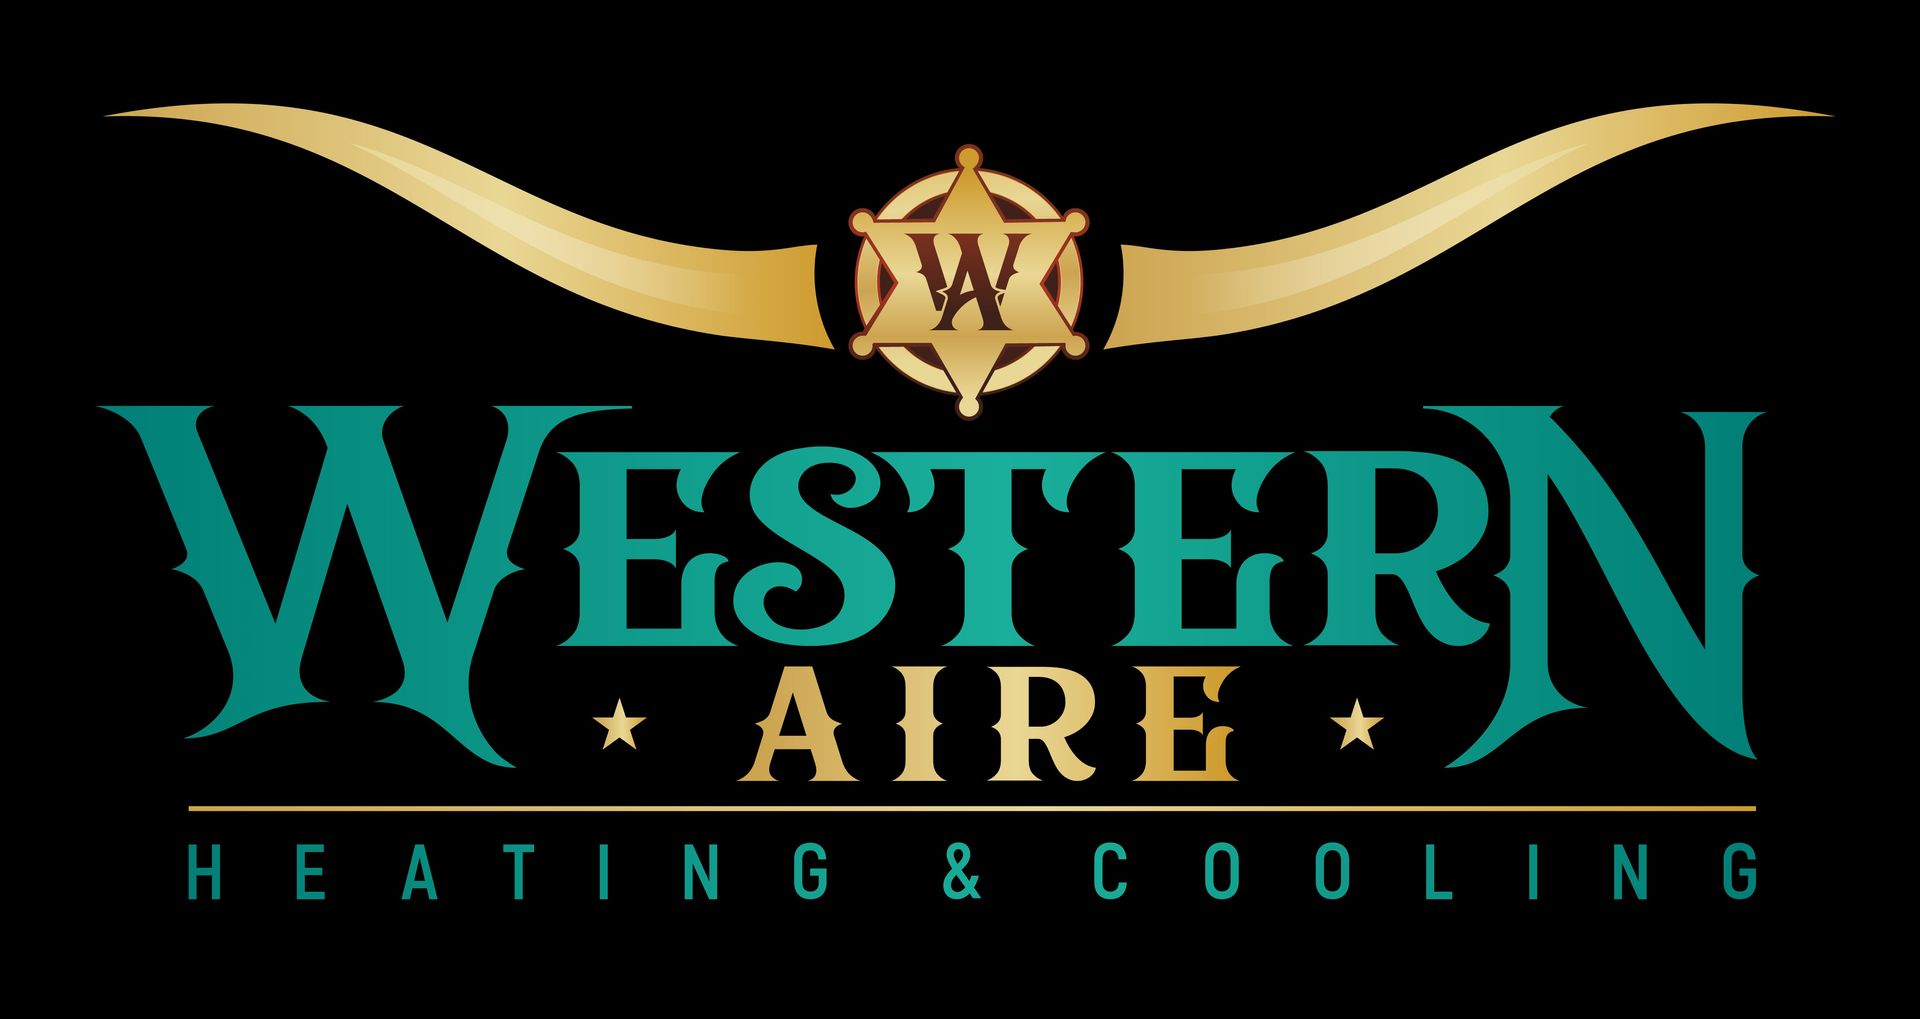 Western Services - Logo